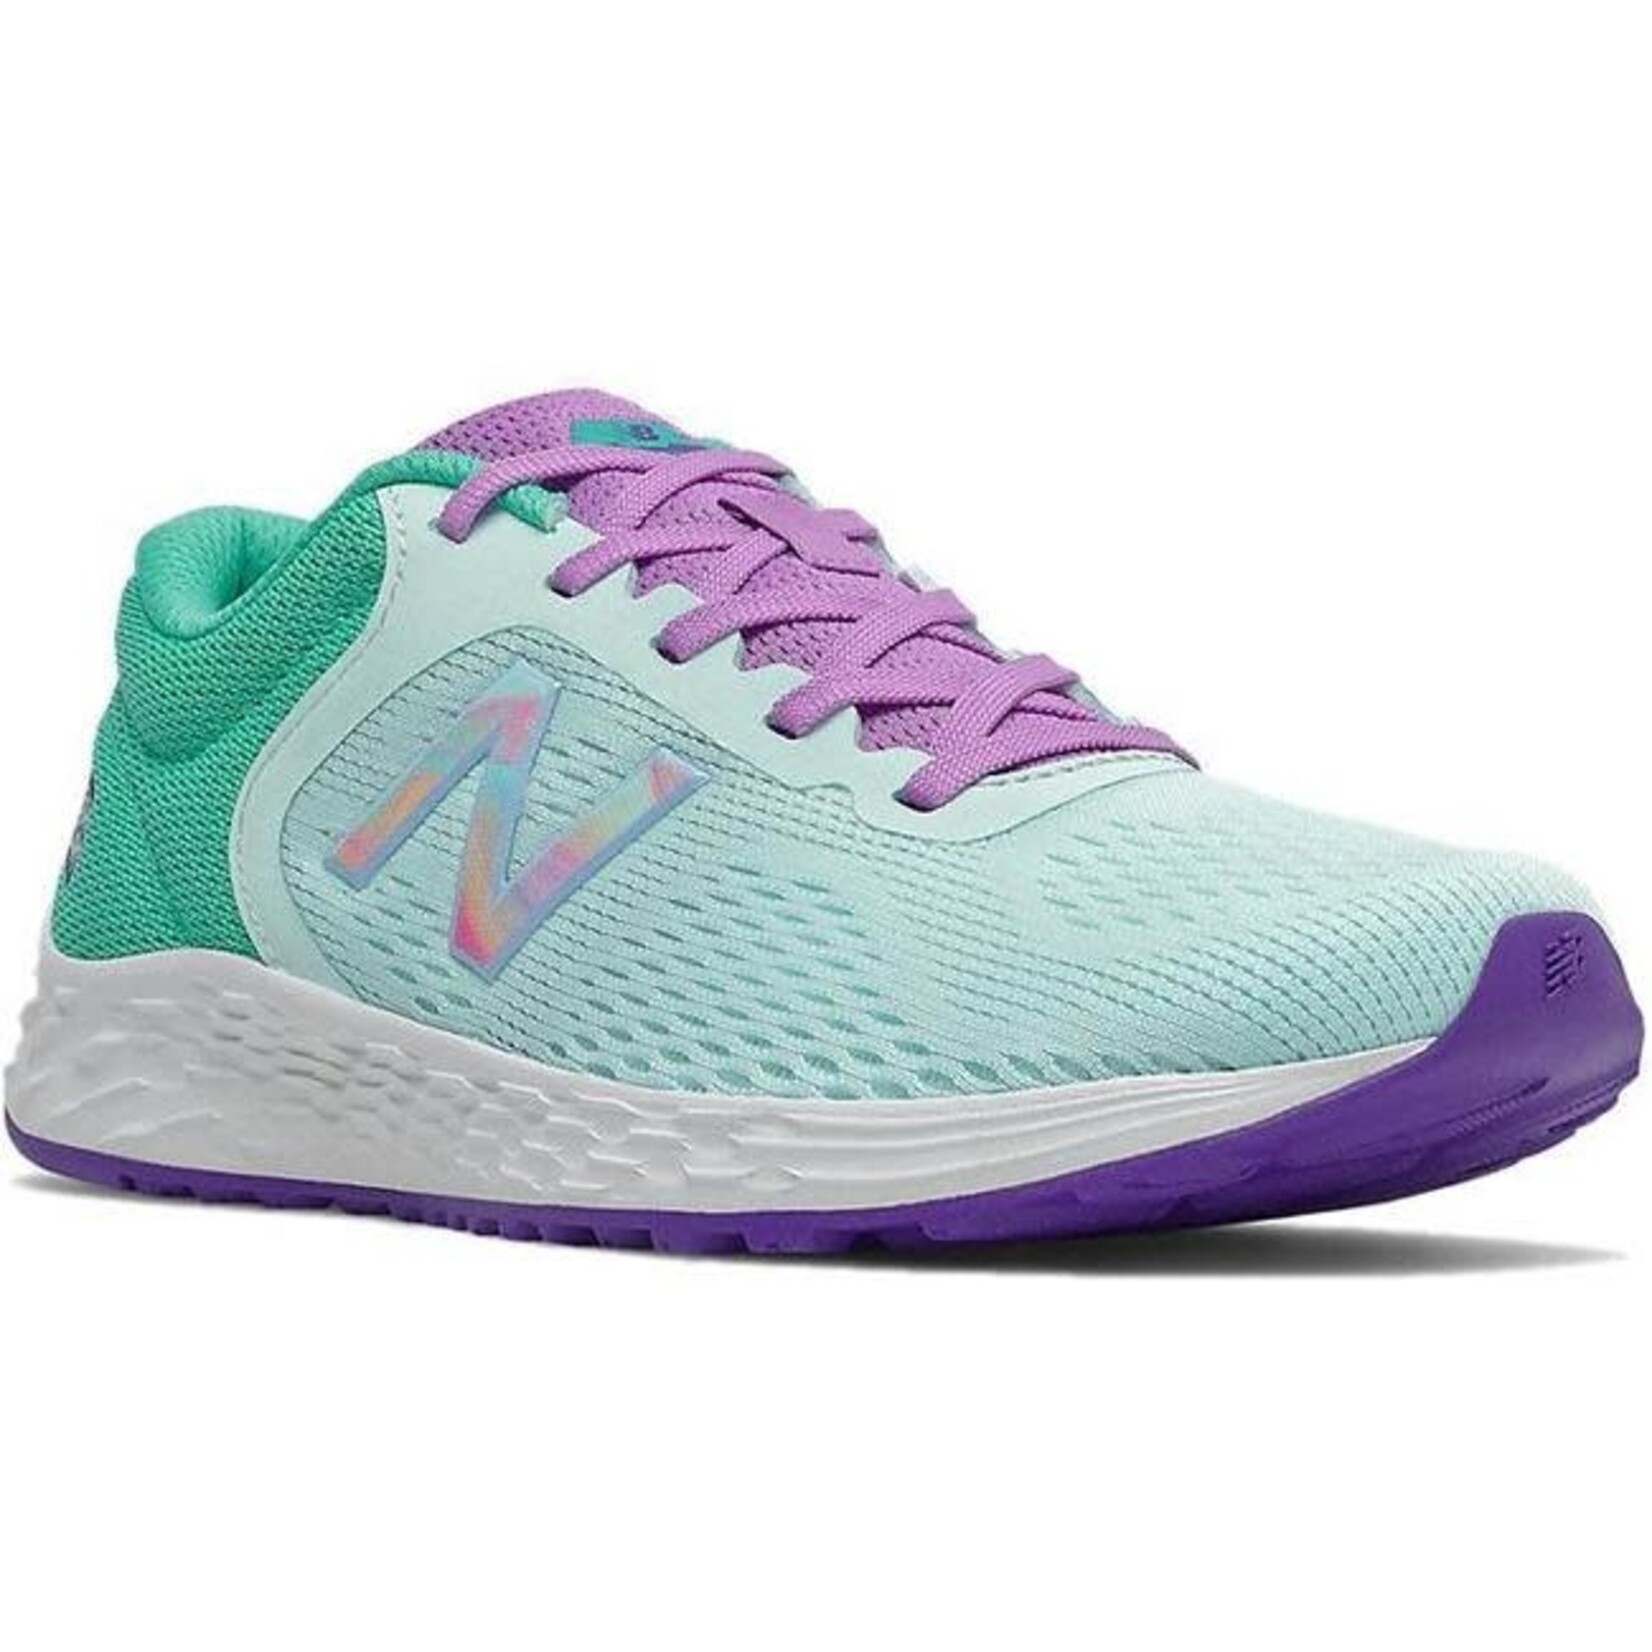 New Balance New Balance Running Shoes, Arishi v2, GGS, Girls